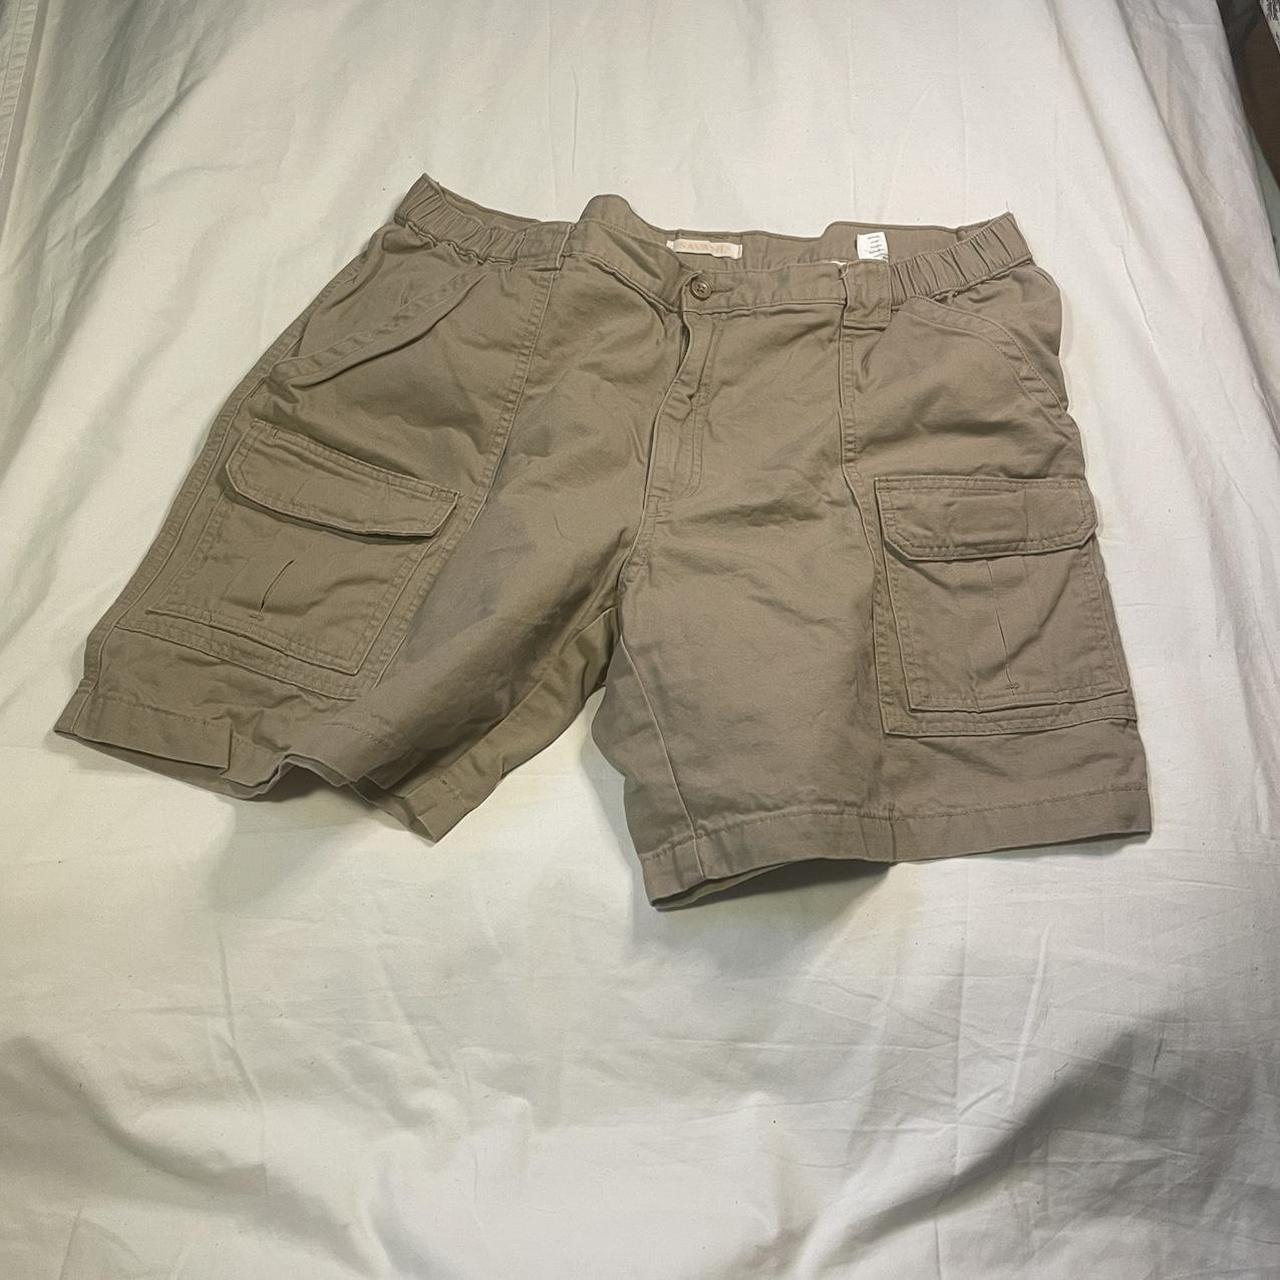 thrifted, size 40 khaki cargo shorts, SAVANE brand - Depop